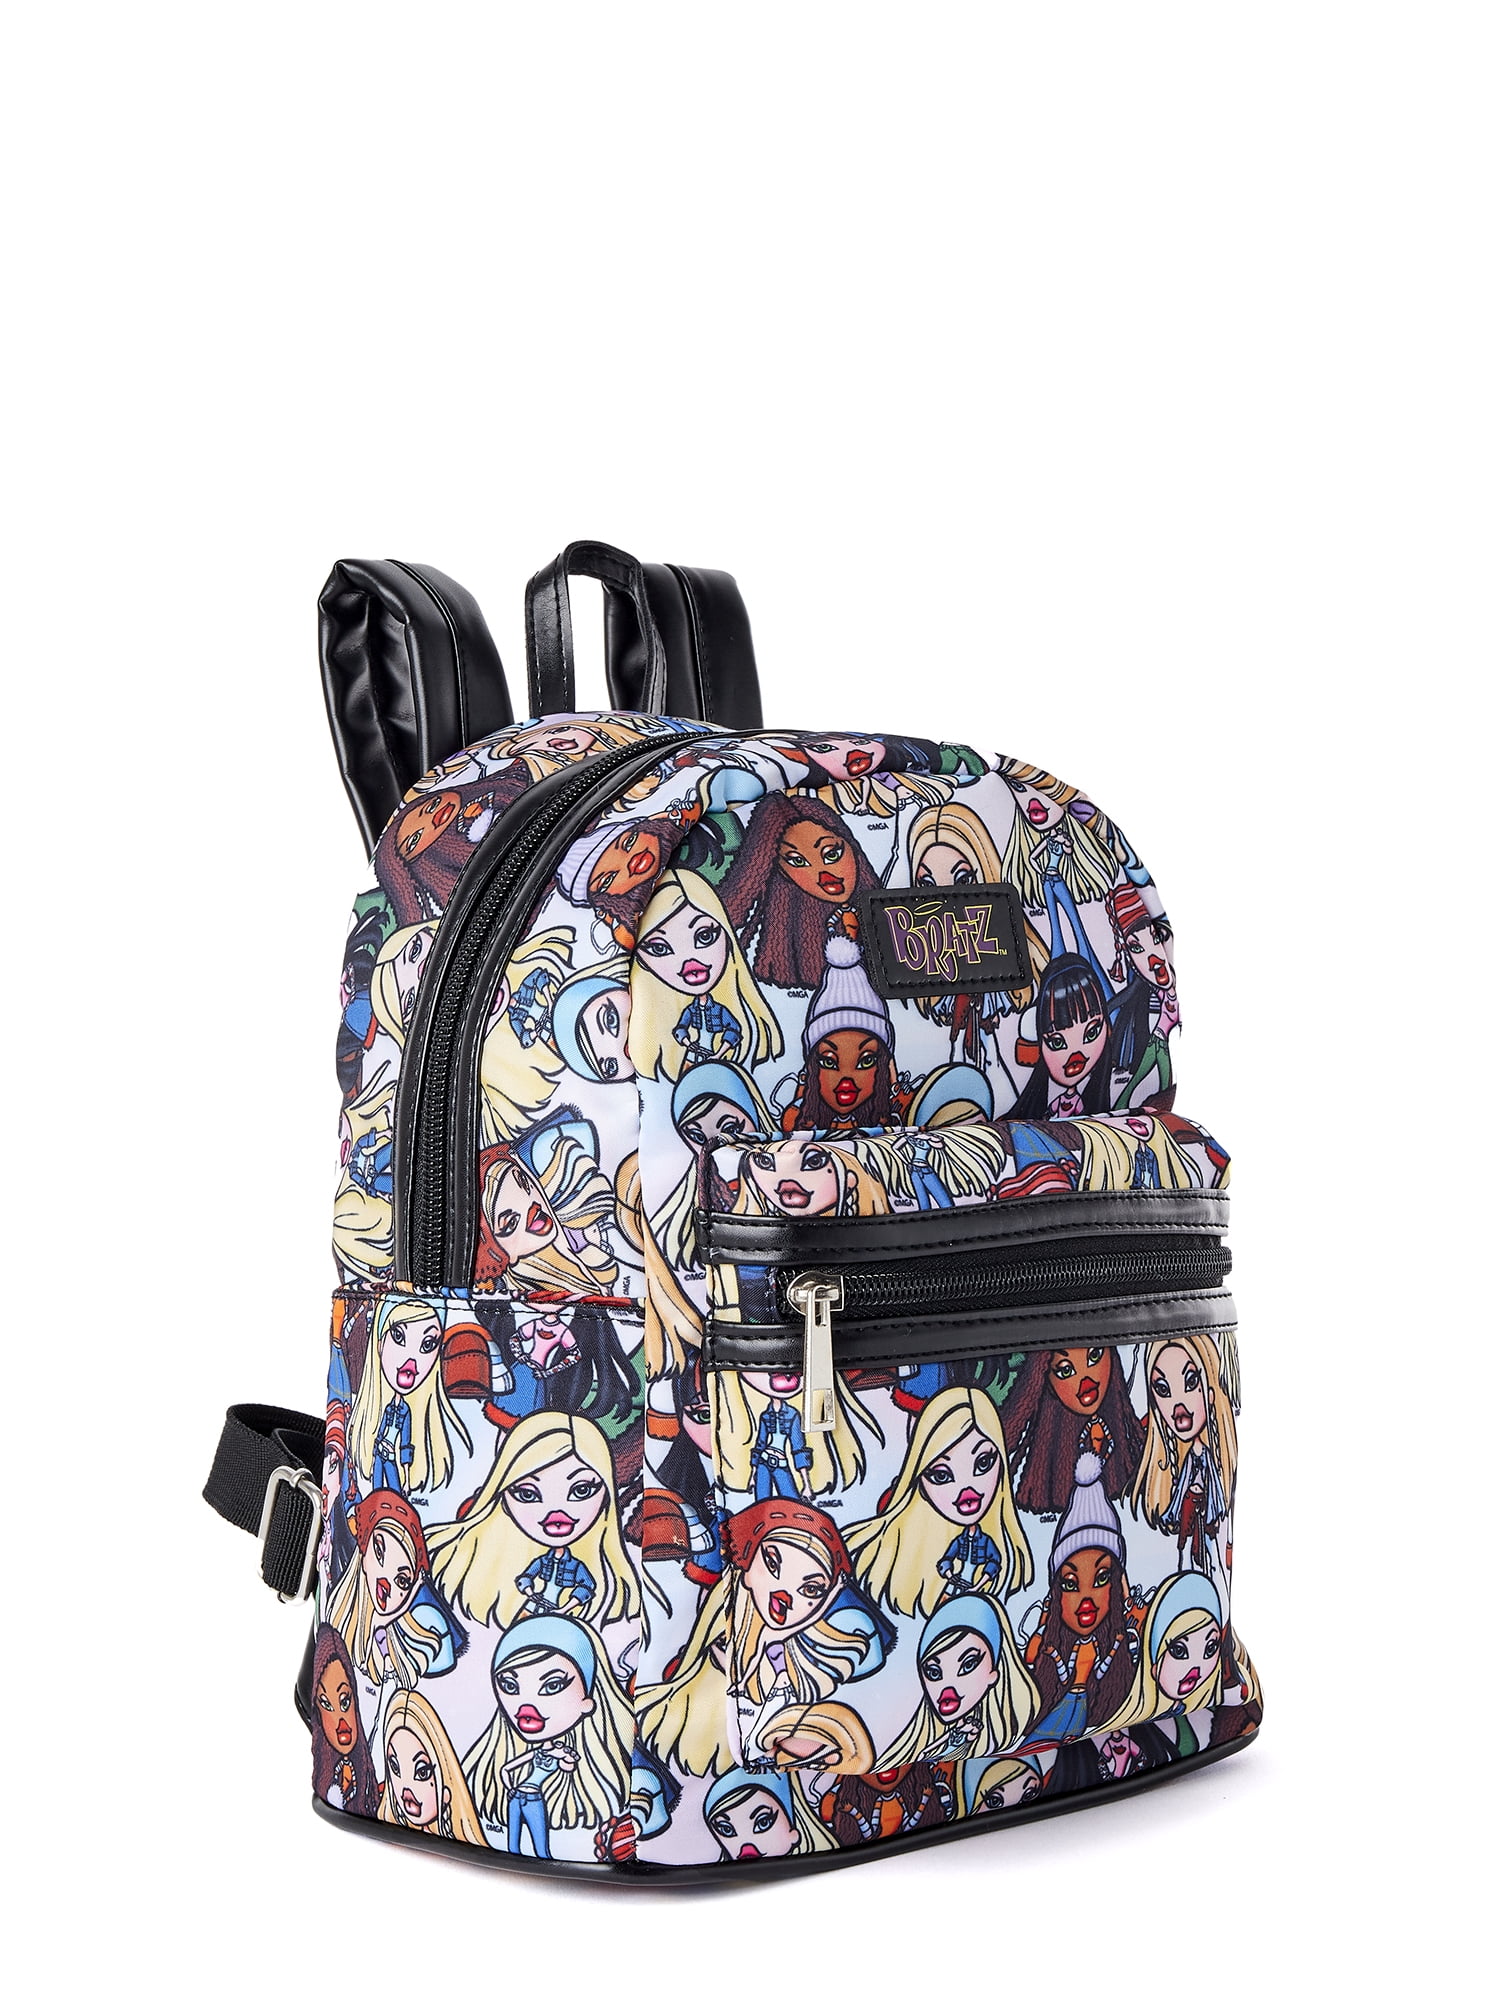 Disney Women's Graphic Mini Backpack - Multi-Color - 1 Each